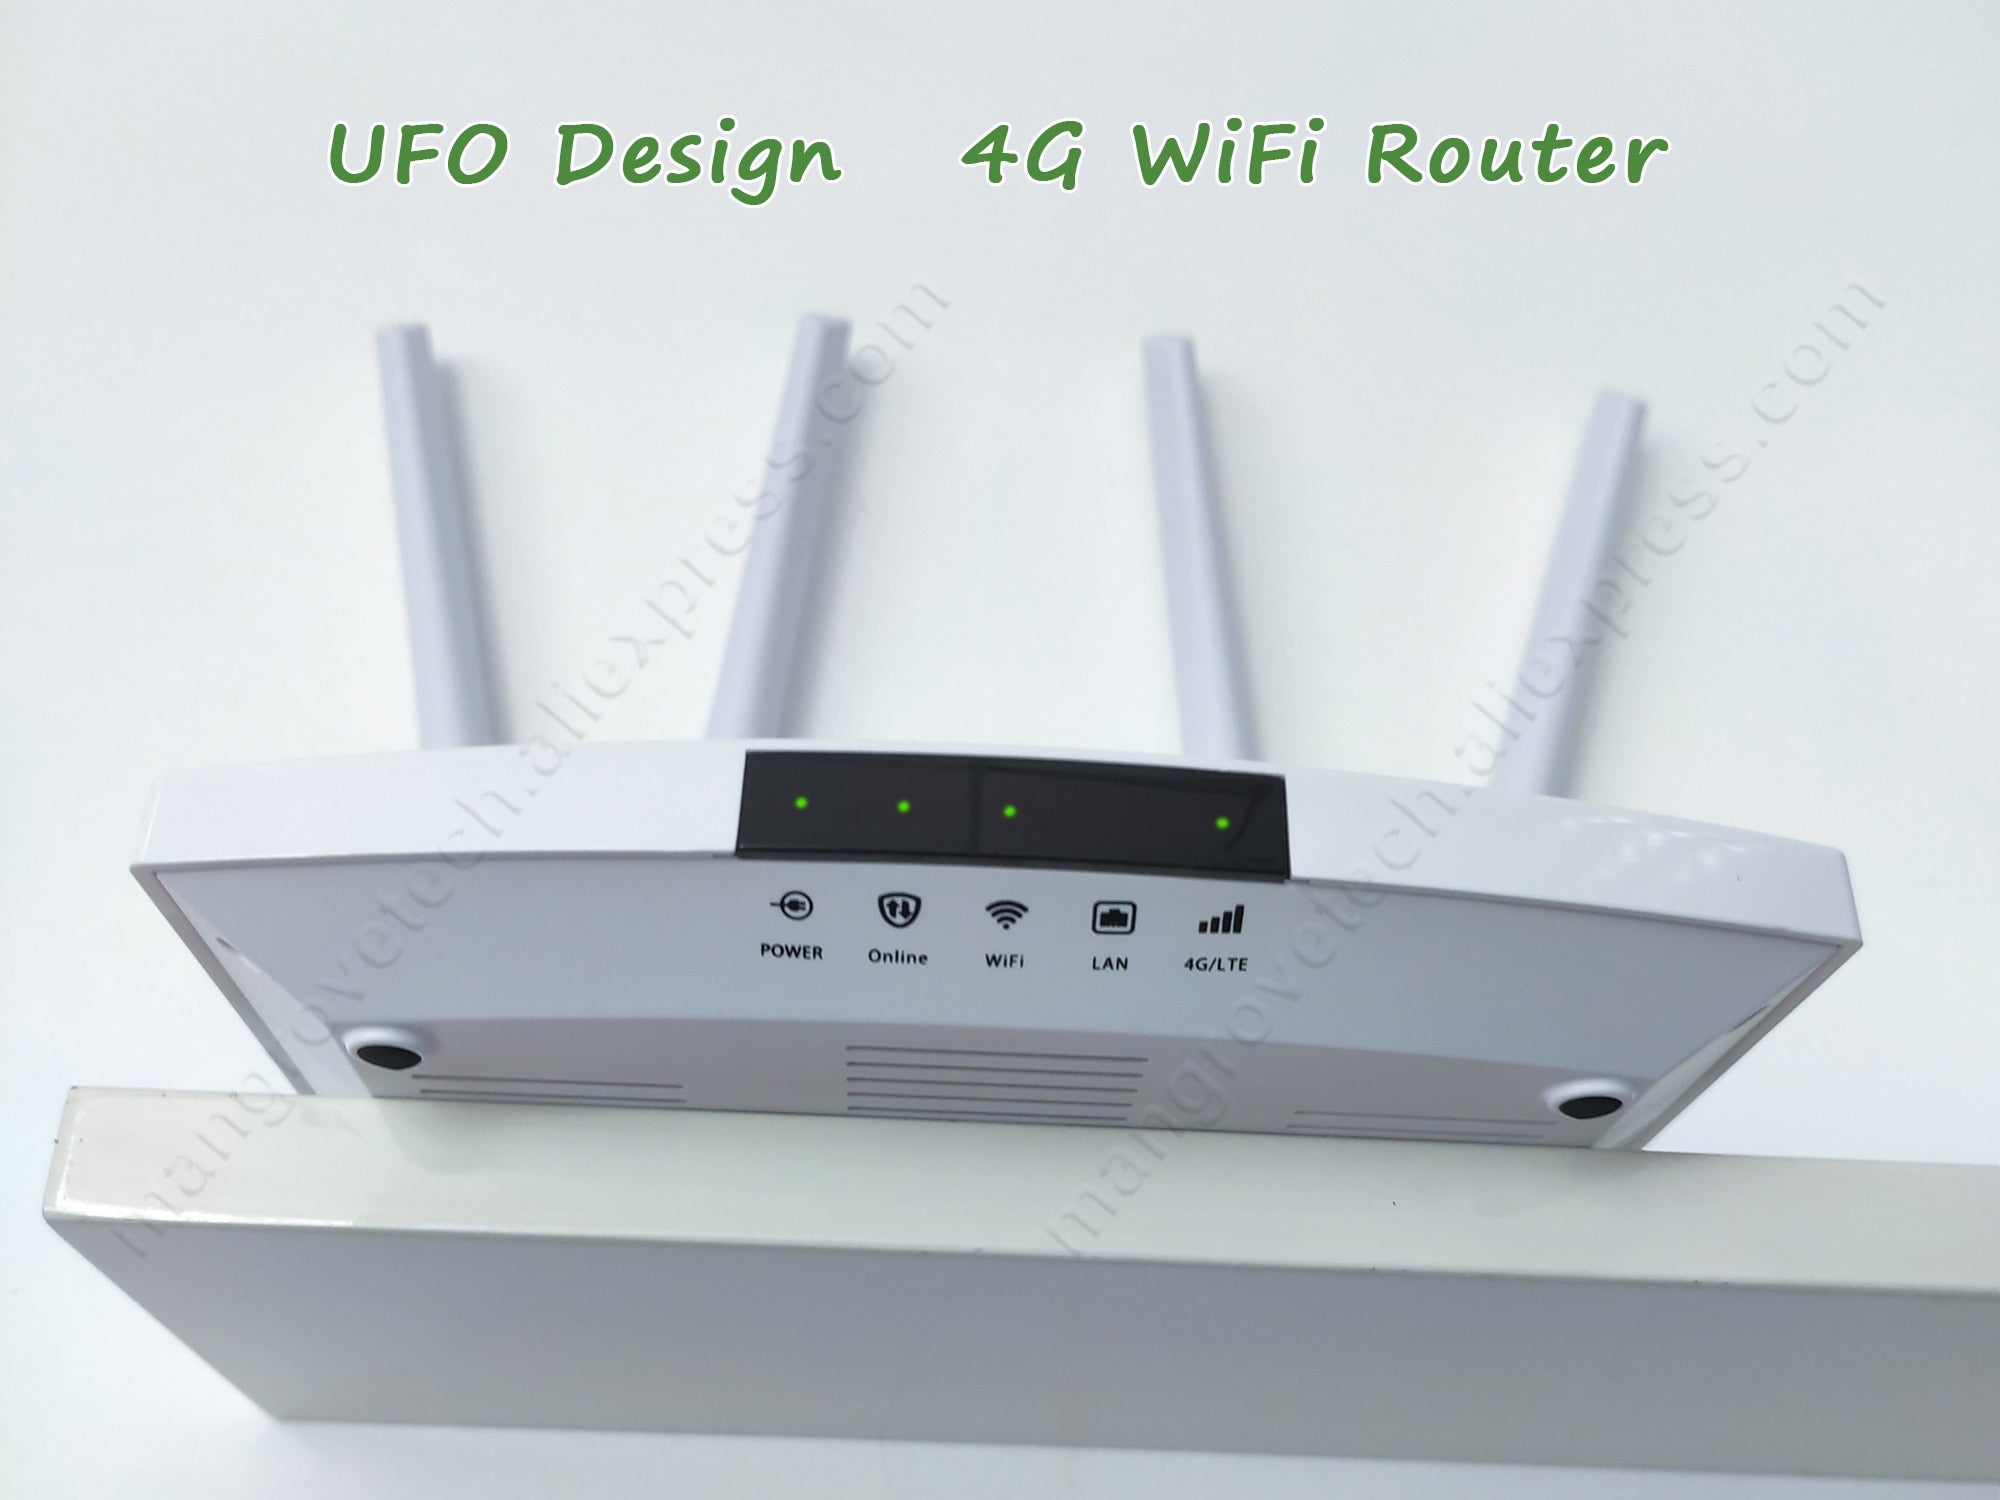 4G router wifi SIM card Hotspot  4G CPE antenna 32 users RJ45 WAN LAN wireless modem LTE dongle